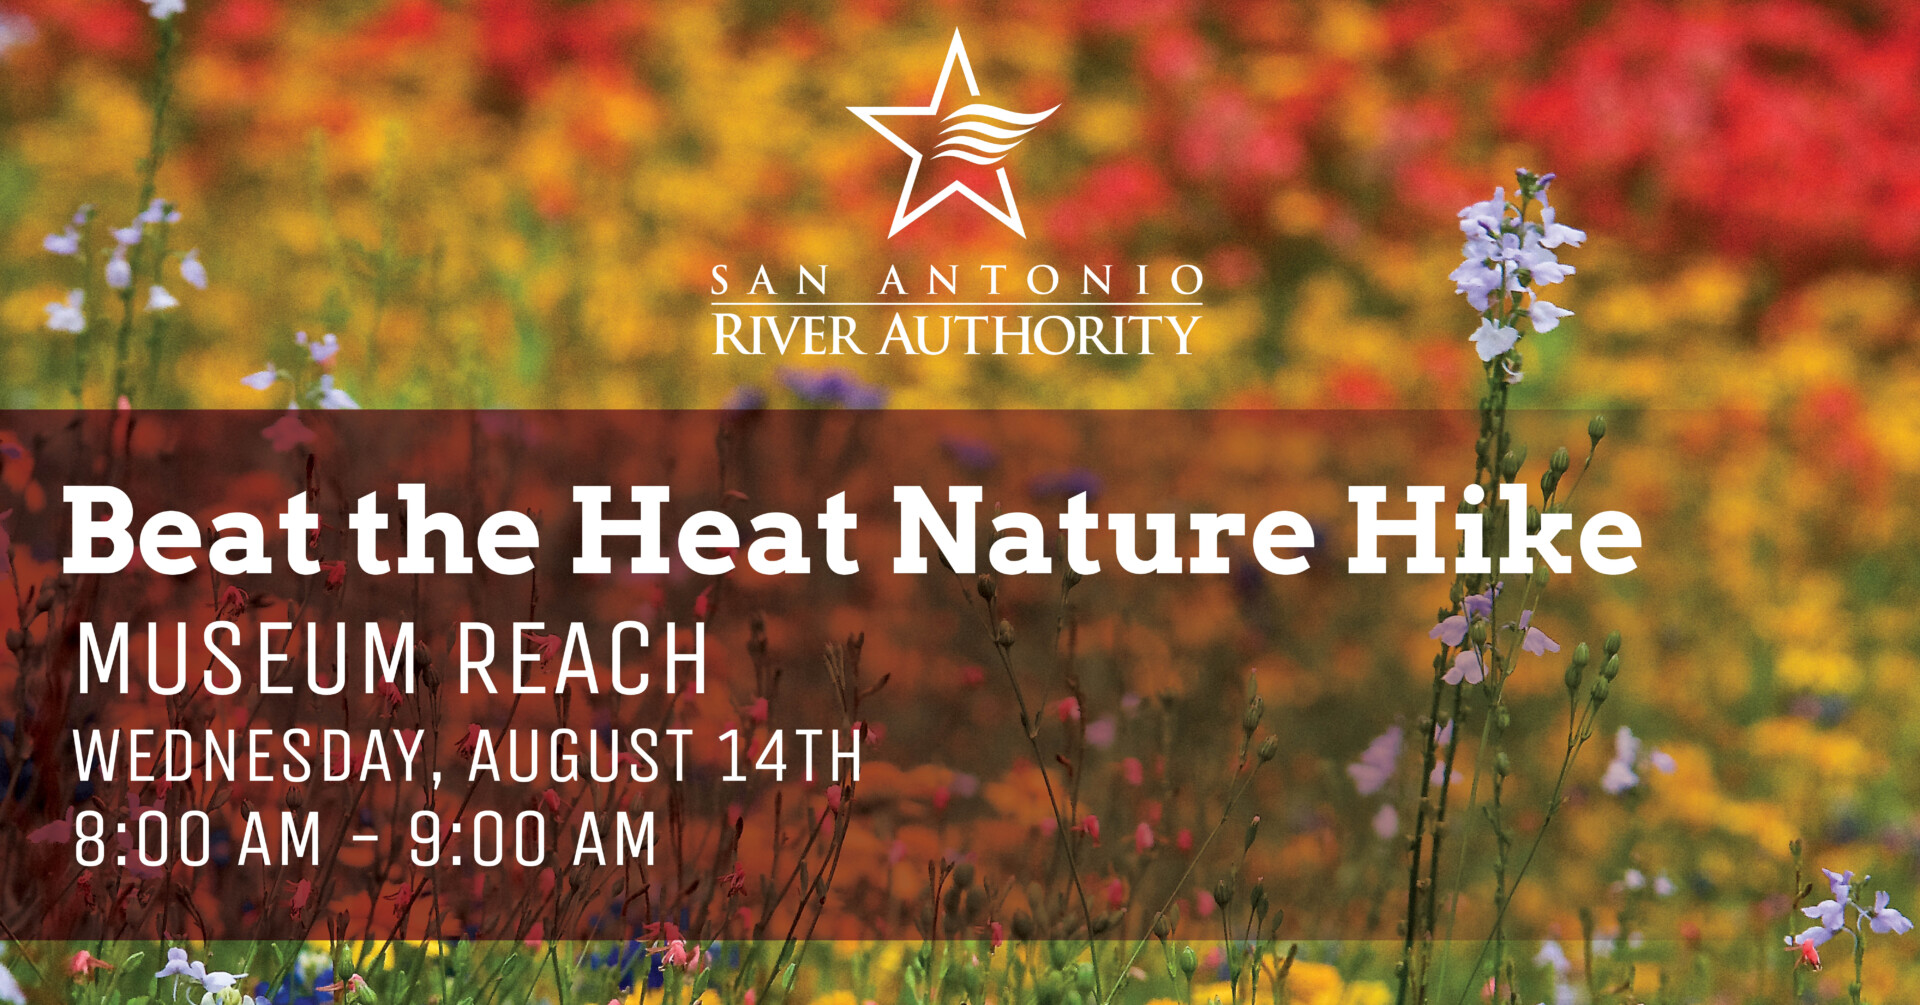 Beat the Heat Nature Hike Museum Reach